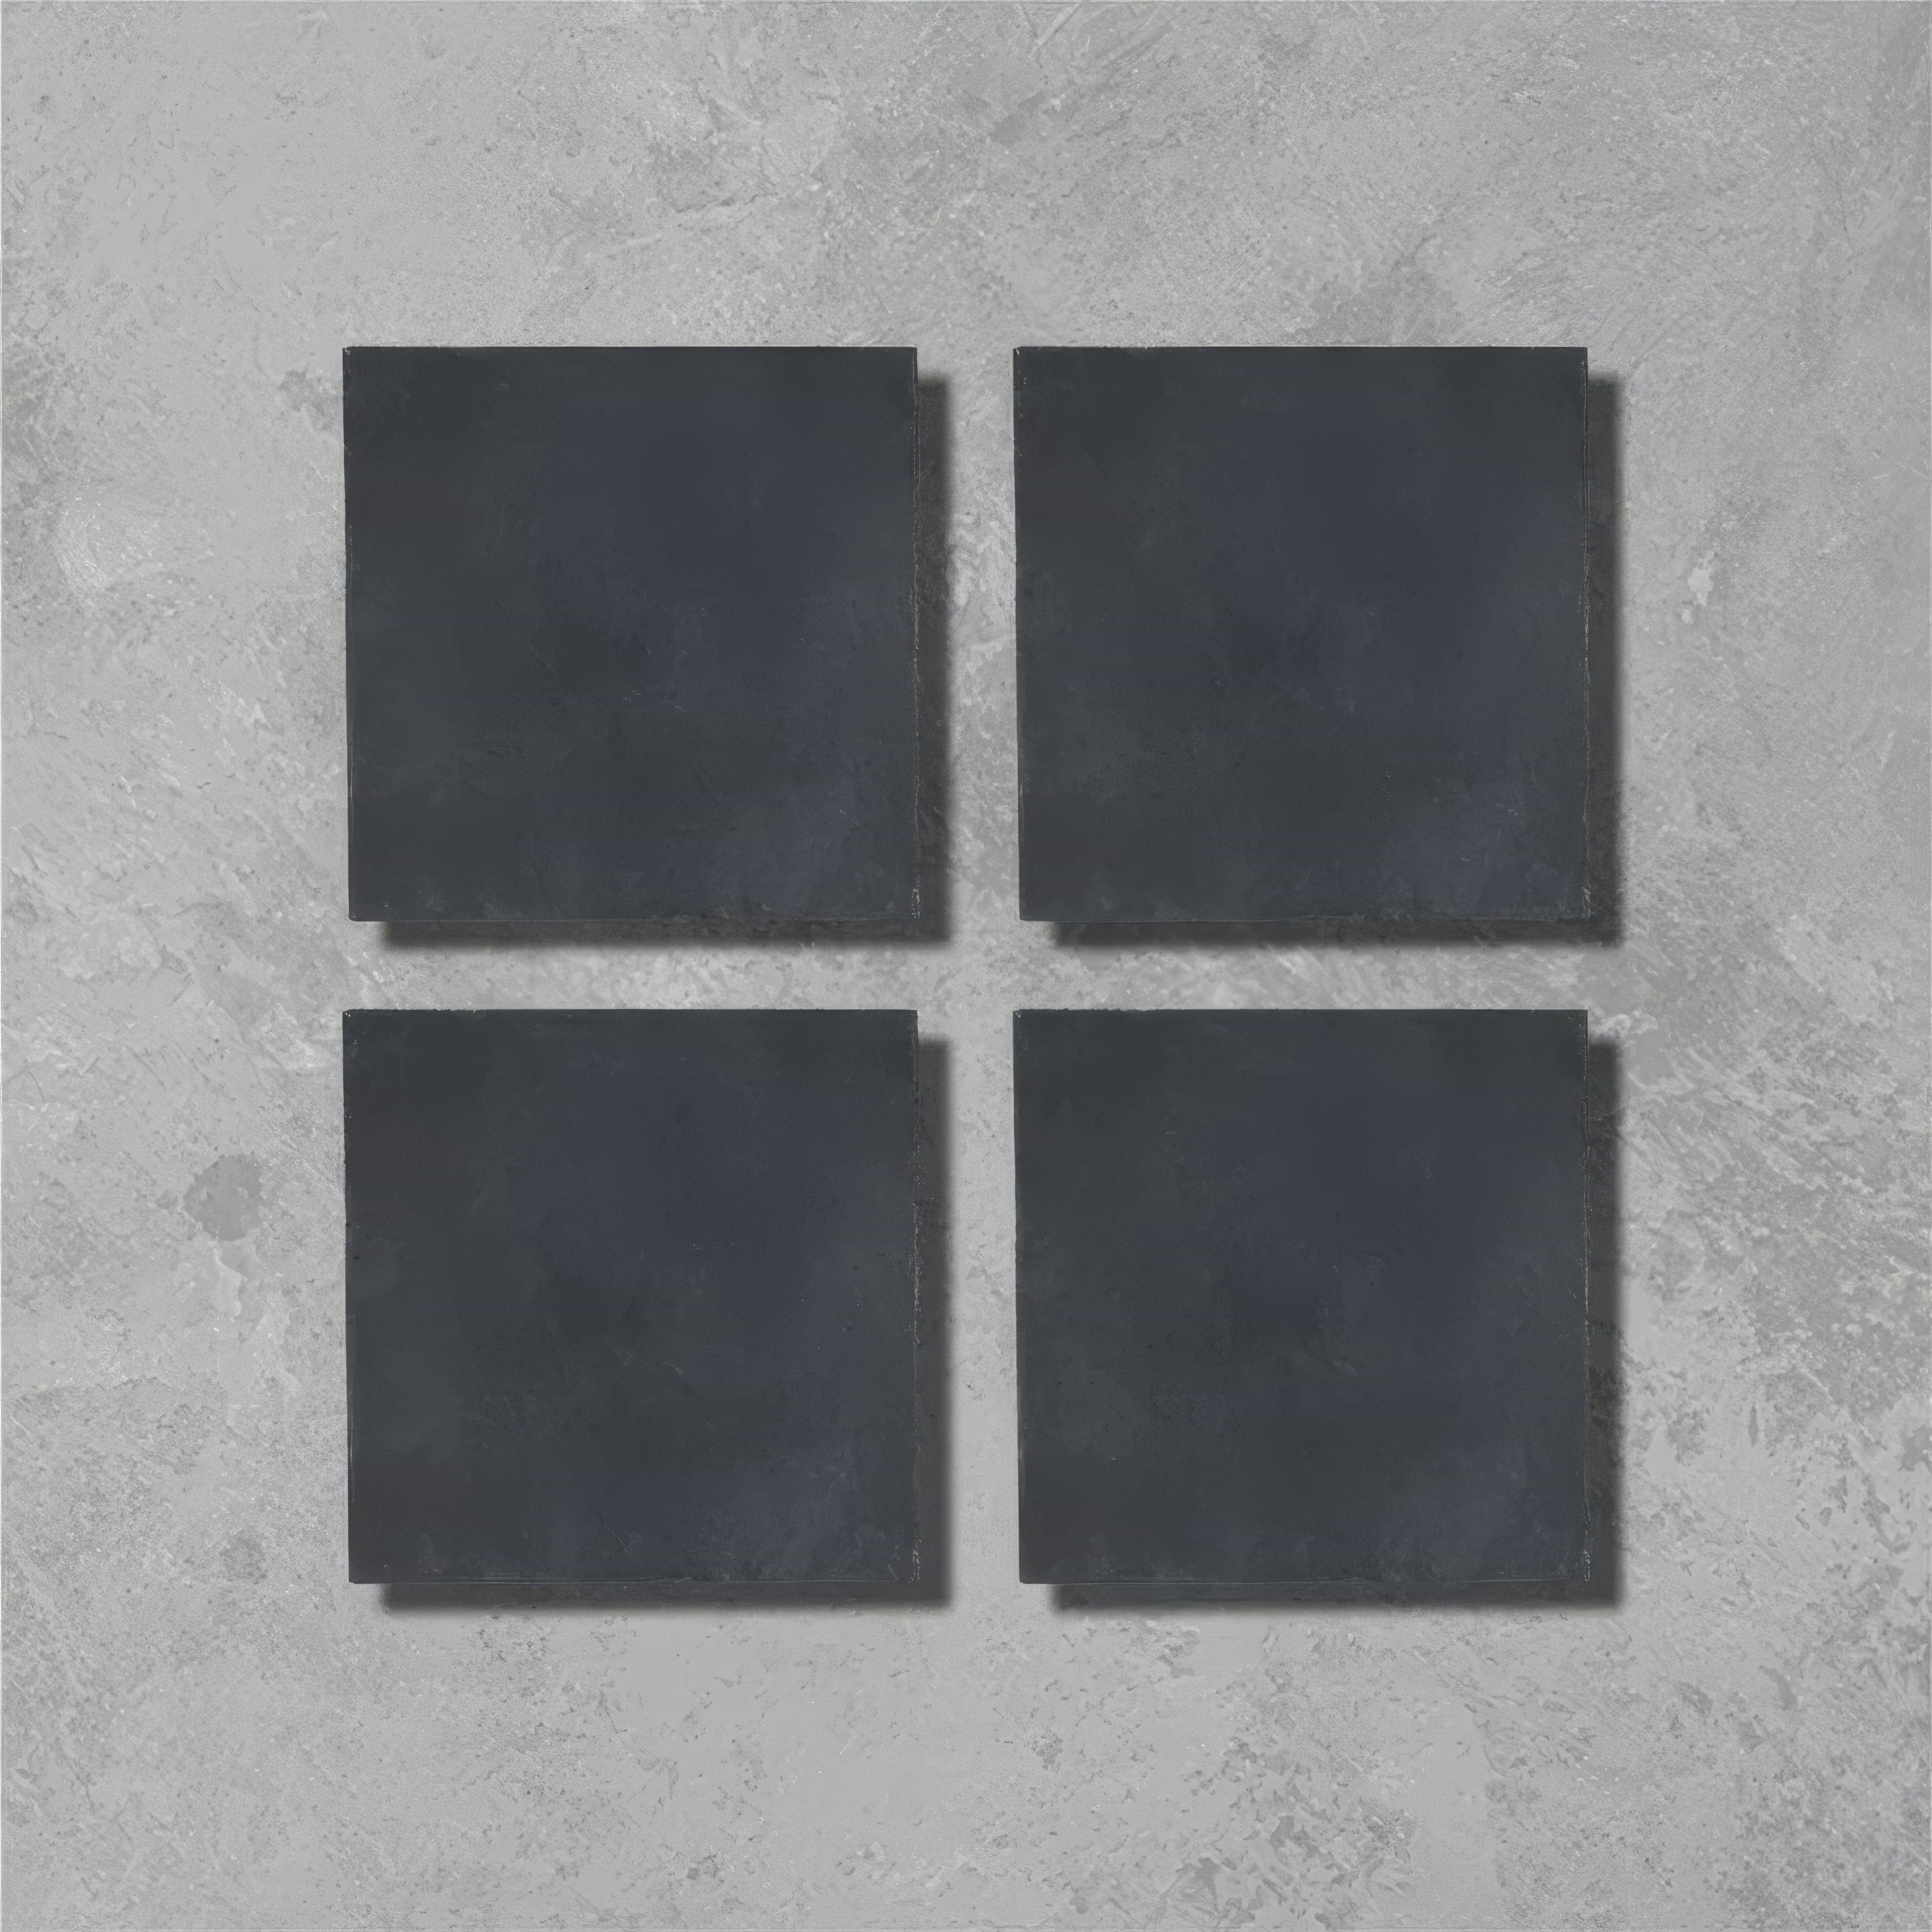 Ebony Black Square Tile - Hyperion Tiles